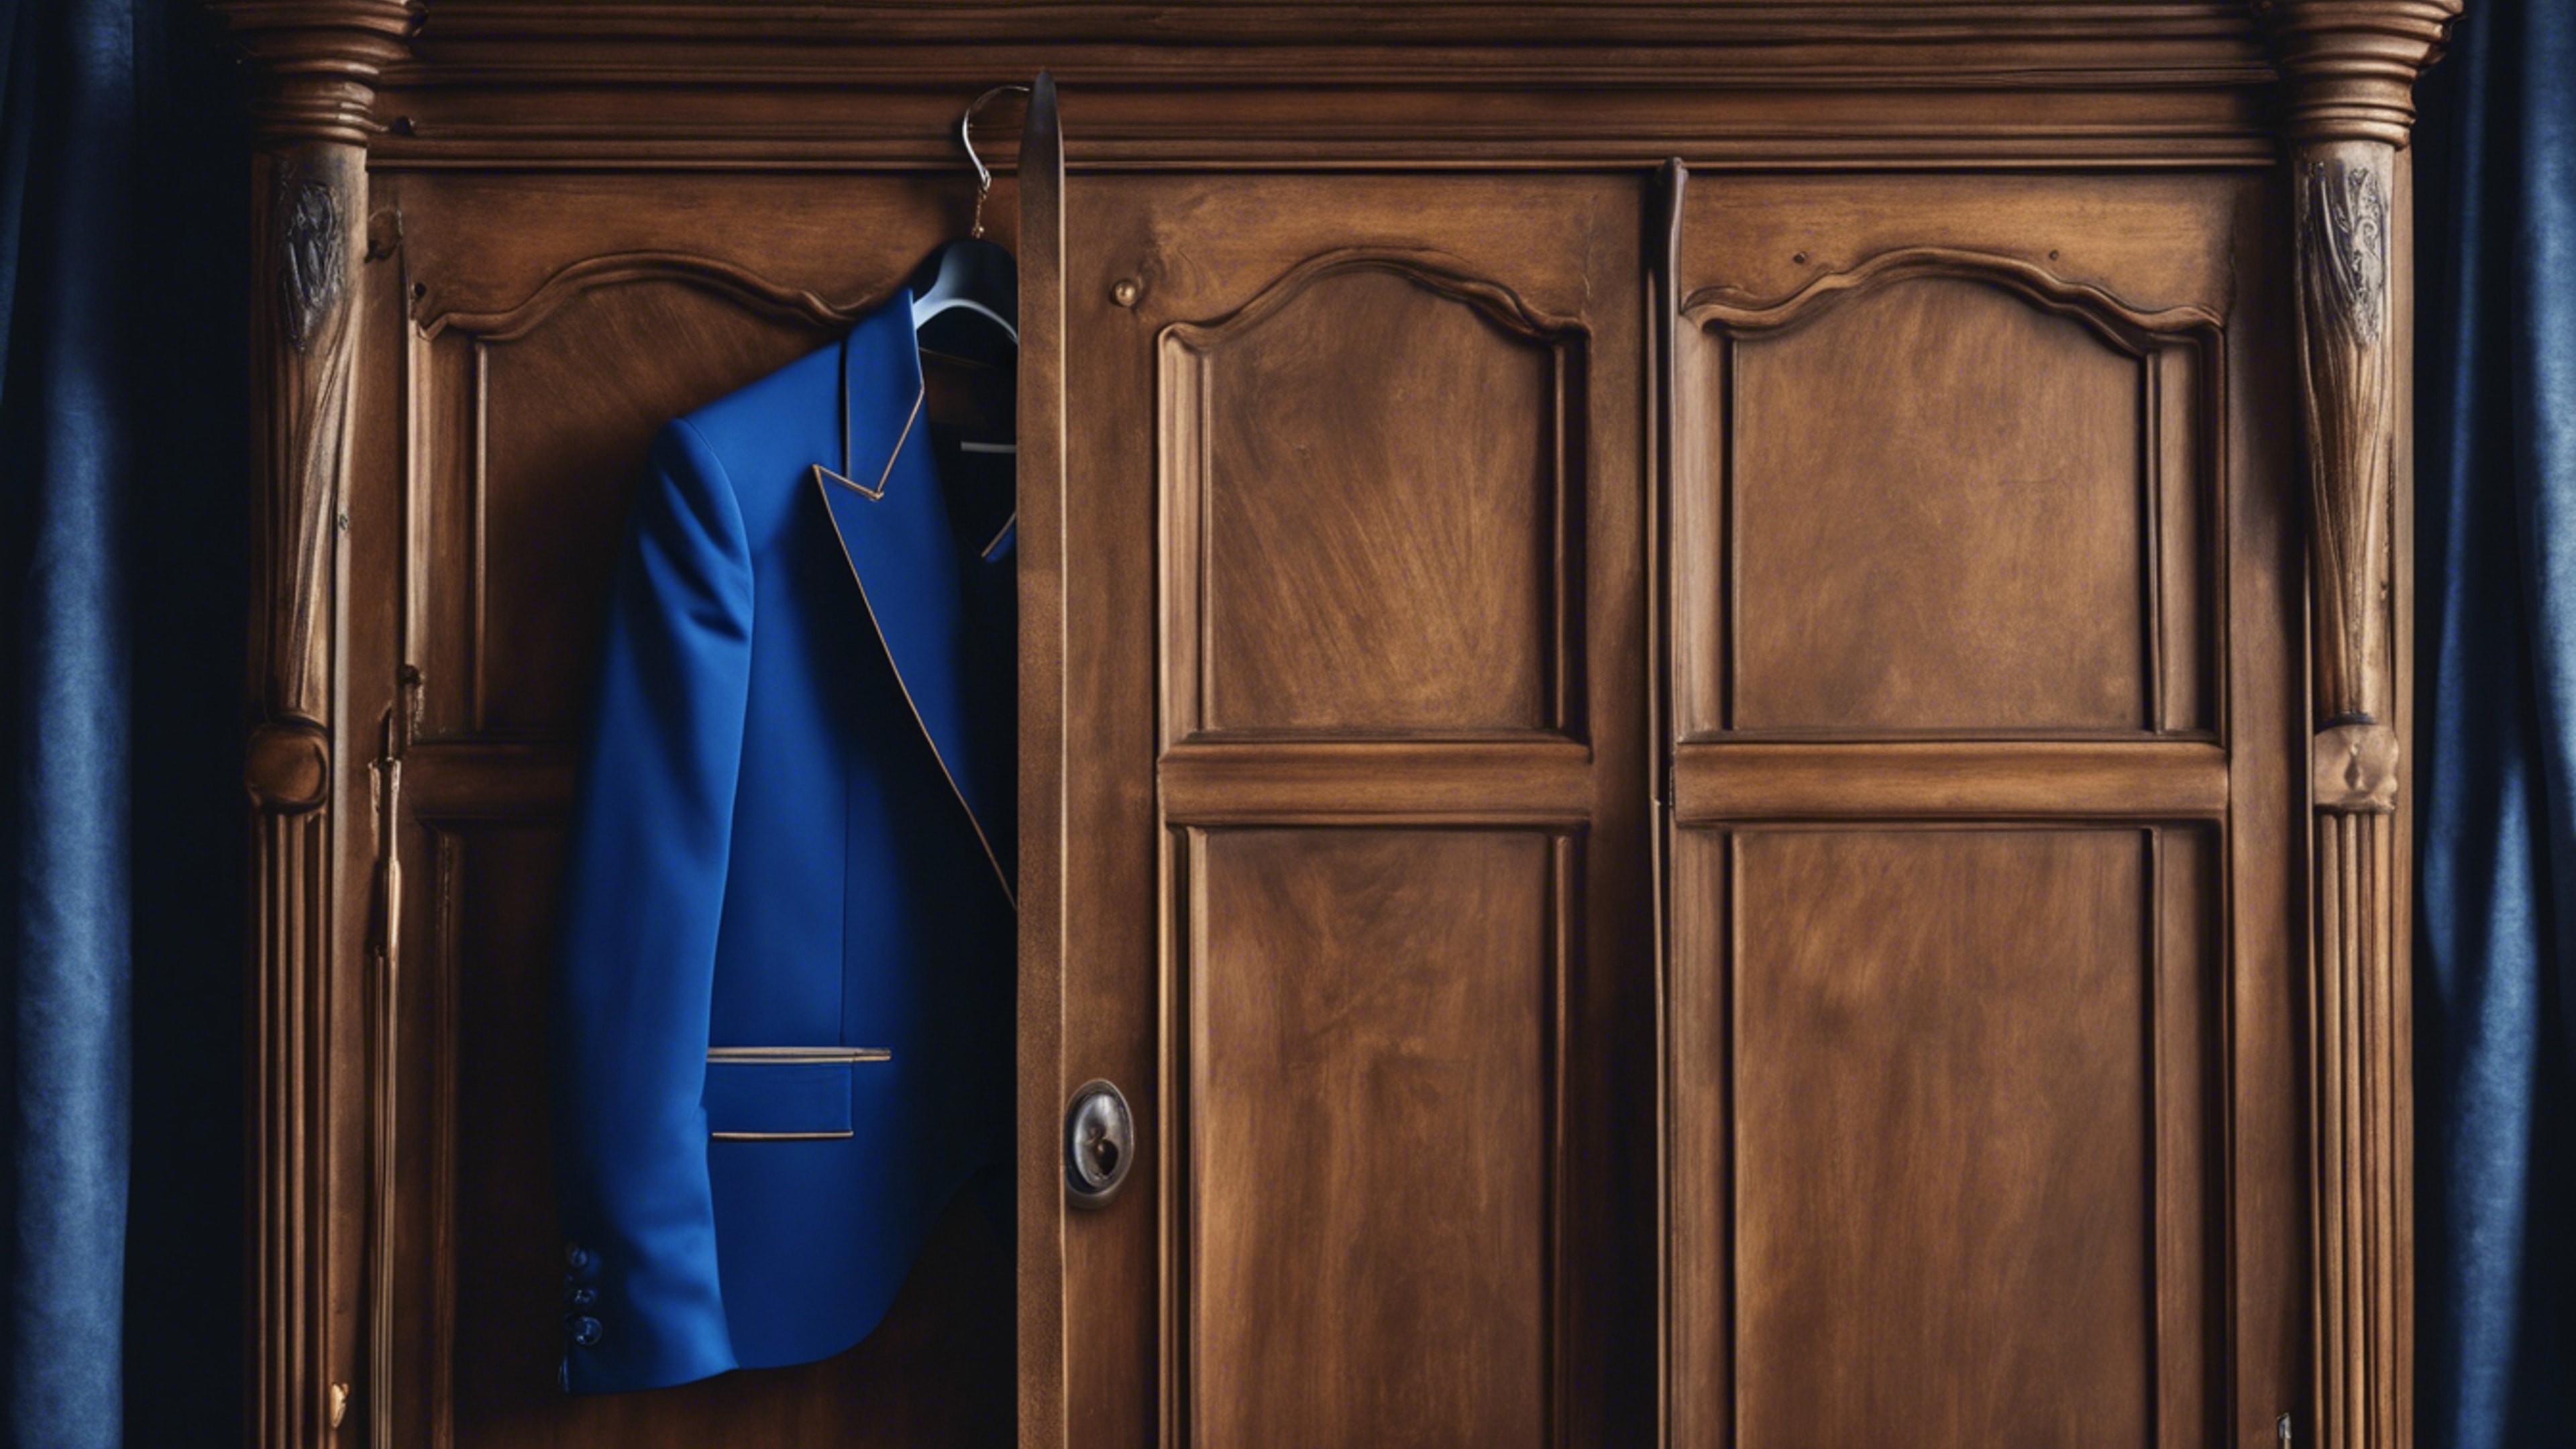 A vintage royal blue tuxedo hanging in a classic antique wardrobe. Tapeta[1e18aa866c984257b969]